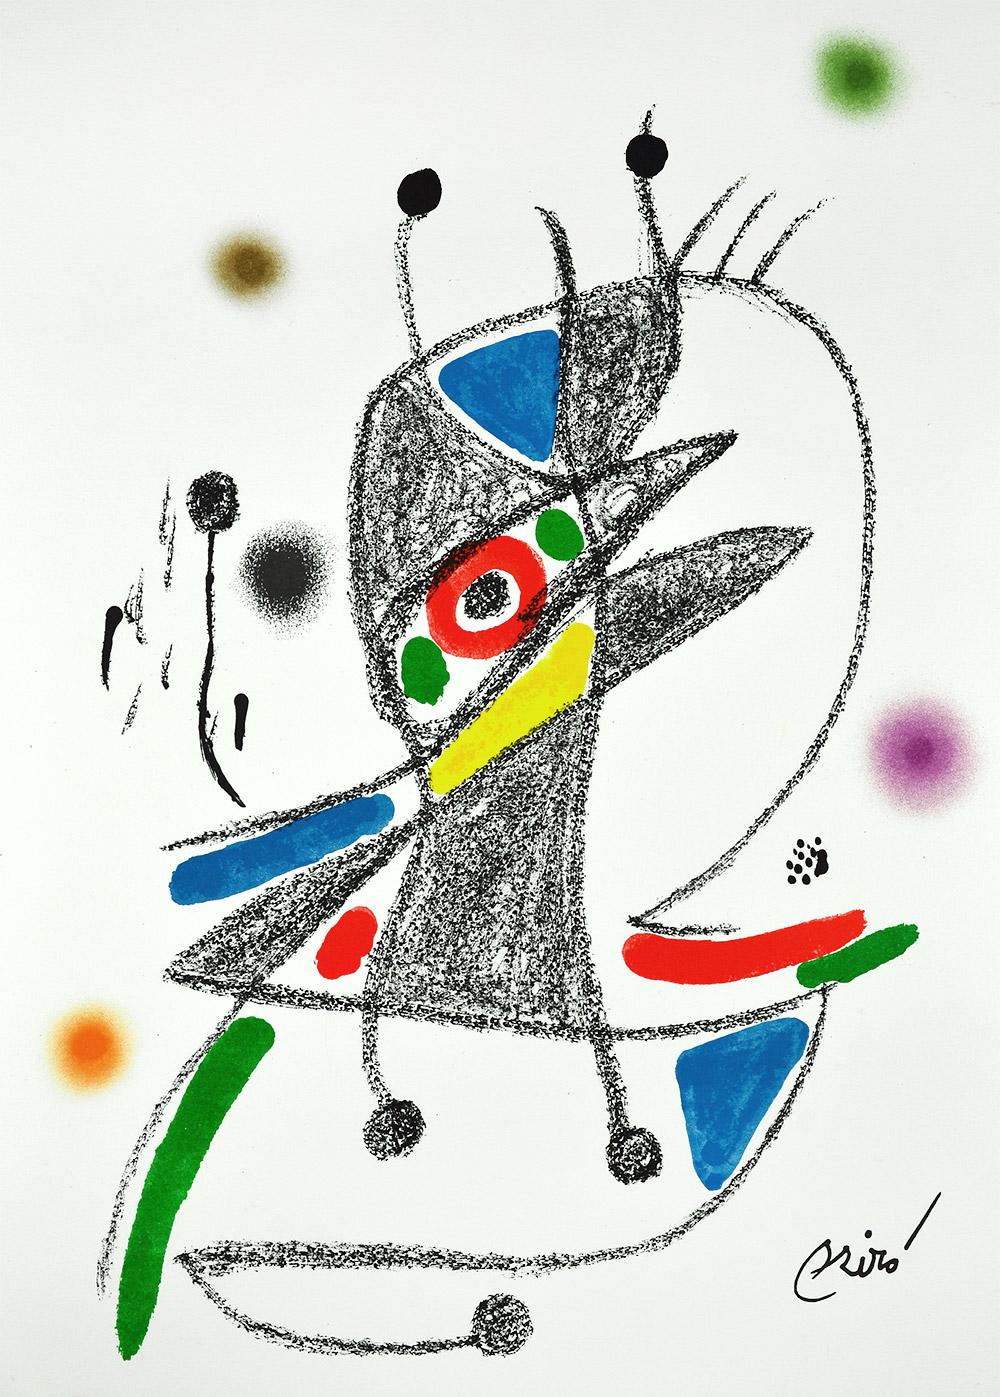 Joan Miró - Maravillas con variaciones acrósticas en el jardín de Miró II
Date of creation: 1975
Medium: Lithograph on Gvarro paper
Edition: 1500
Size: 49,5 x 35,5 cm
Condition: In very good conditions and never framed
Observations: Lithograph on